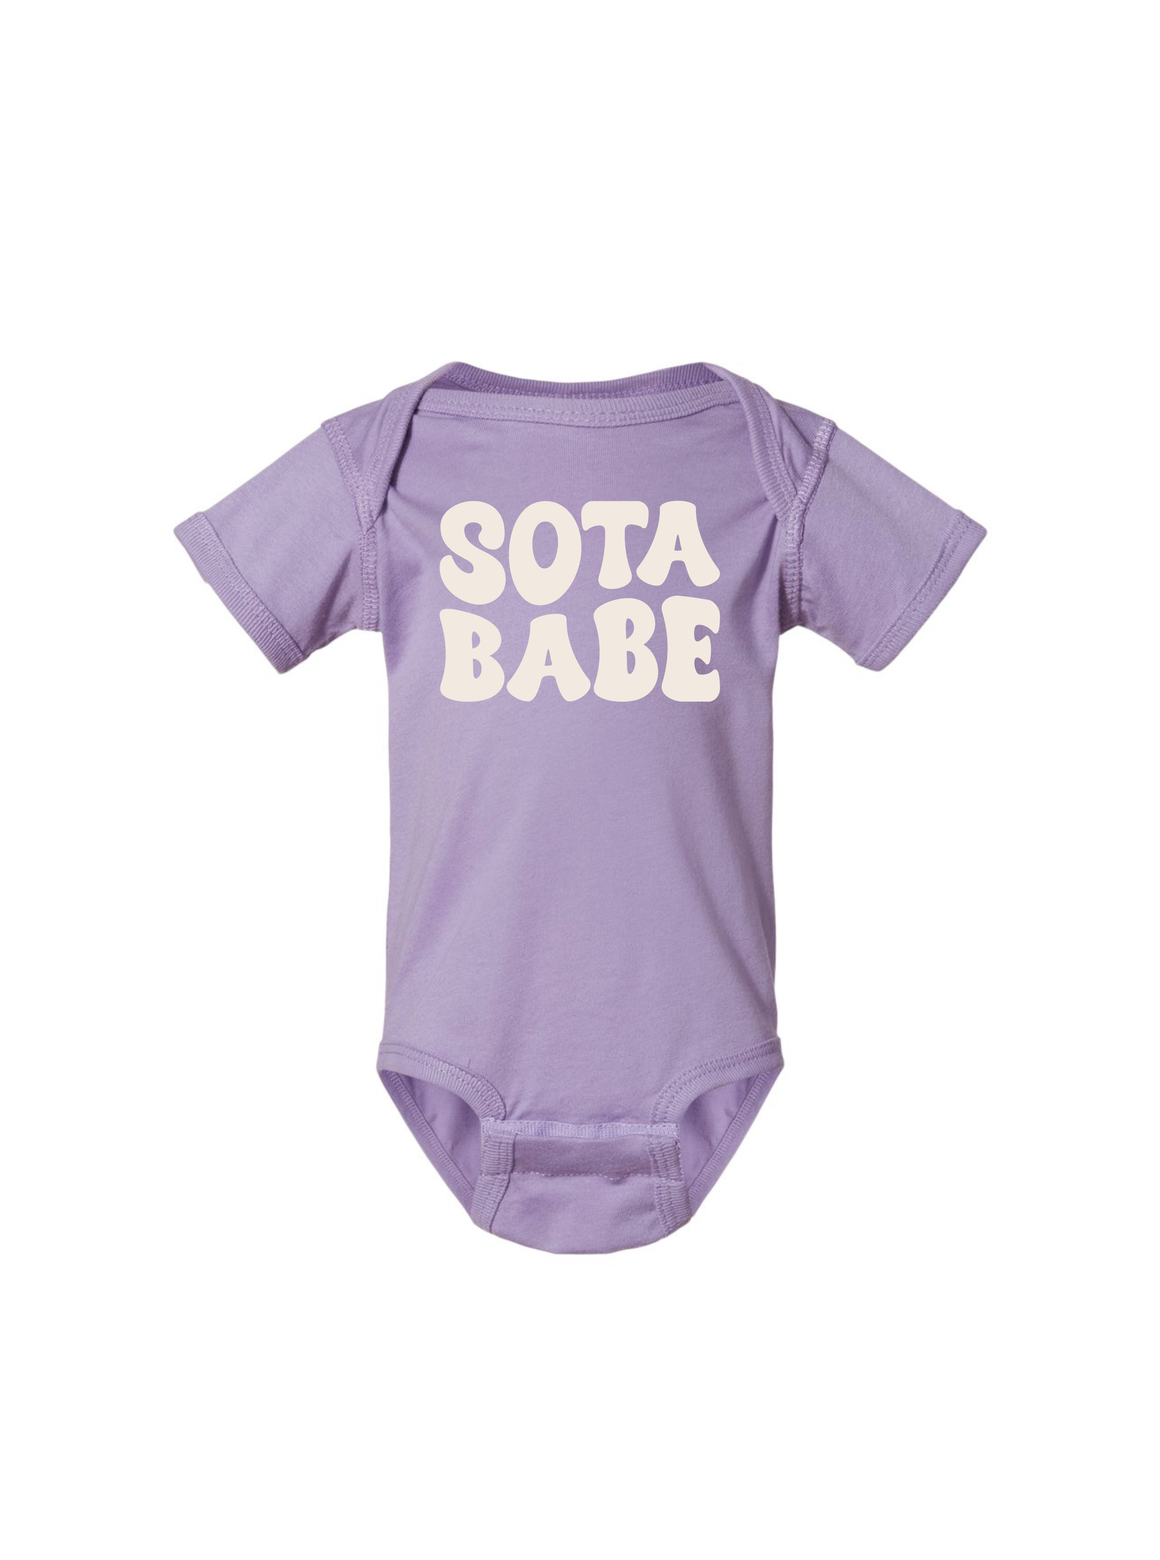 Sota Babe Onesie [lavender] - Northern Print Co.